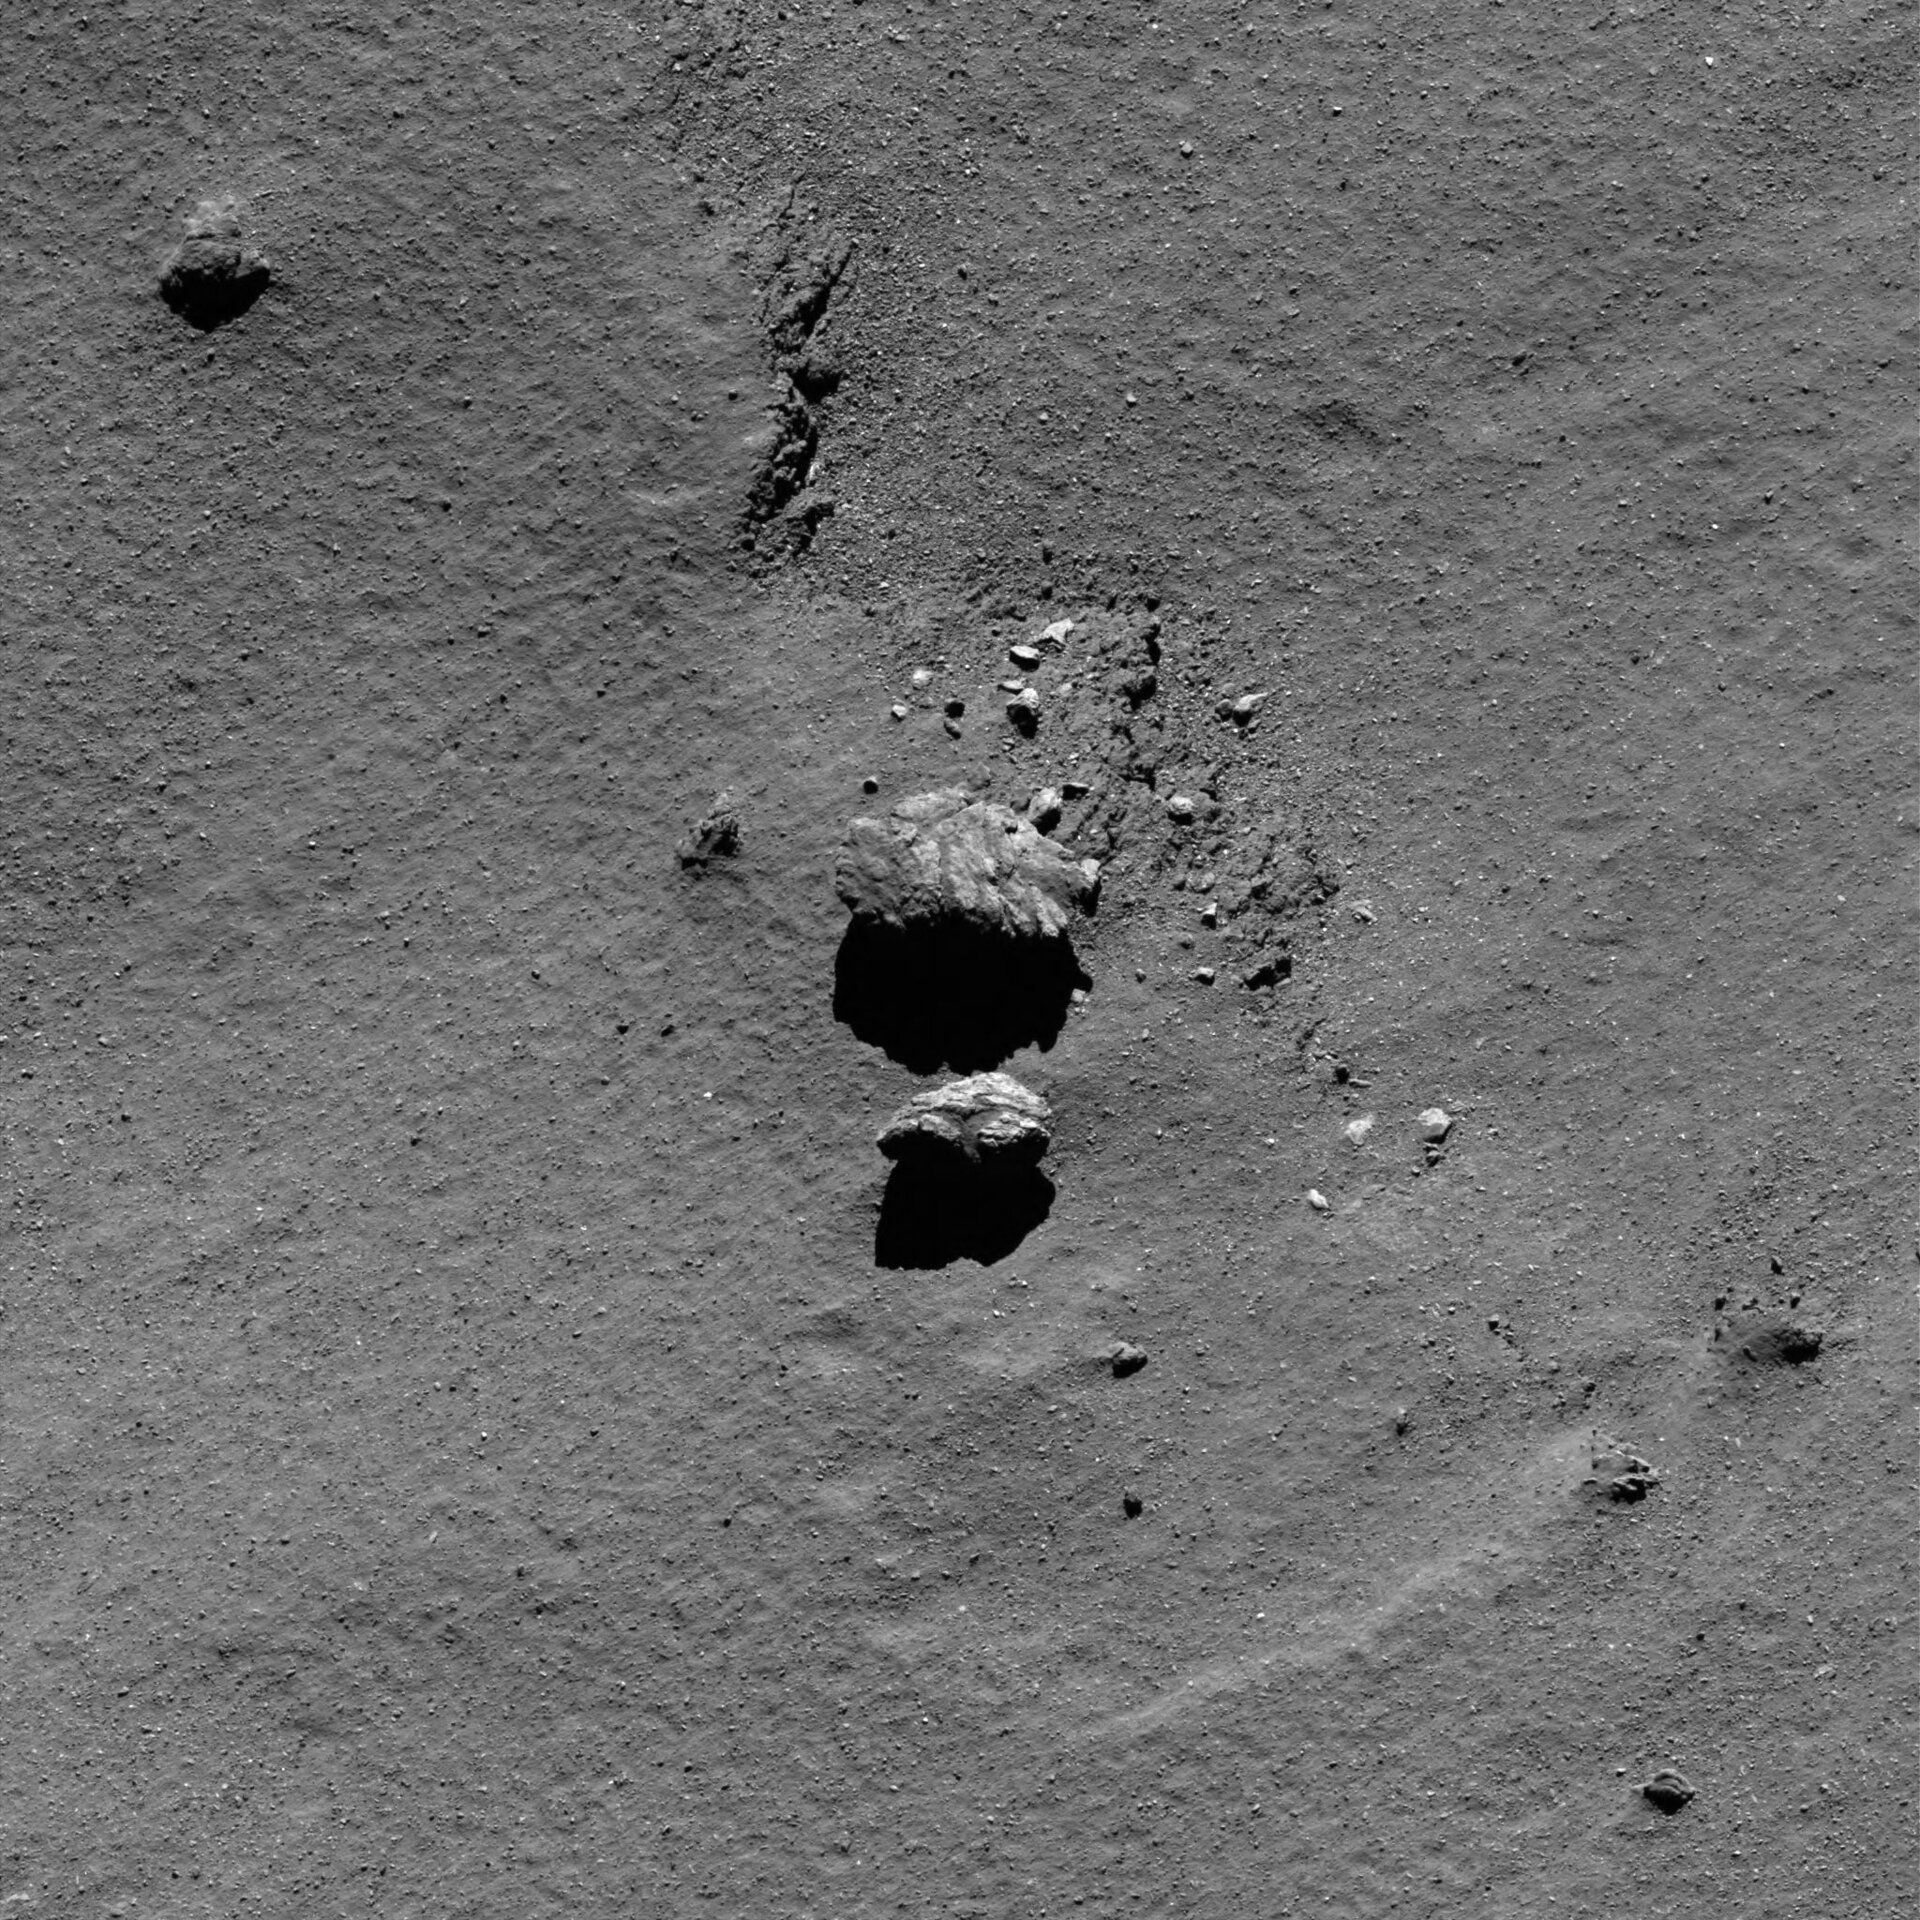 Comet on 18 August 2016 – OSIRIS narrow-angle camera